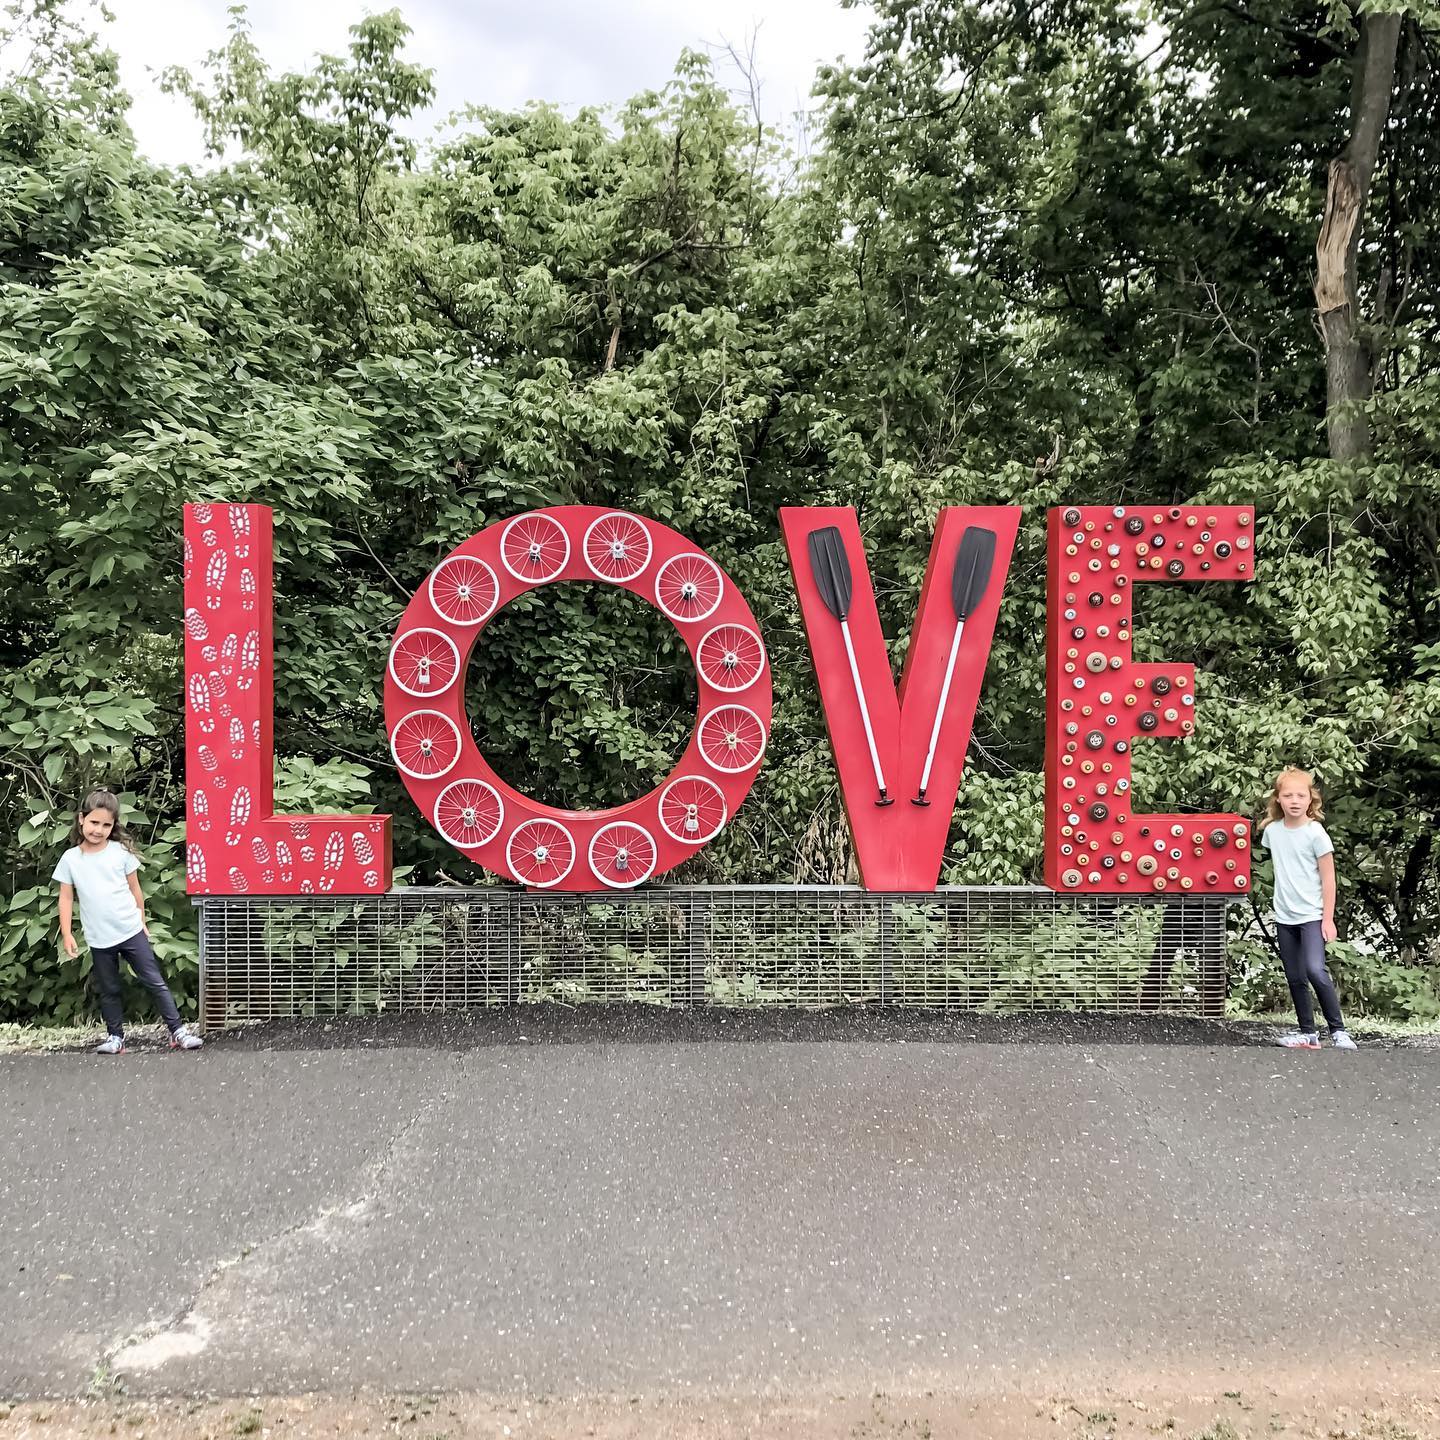 Virginia is for Lovers - LOVEworks in Lynchburg, VA